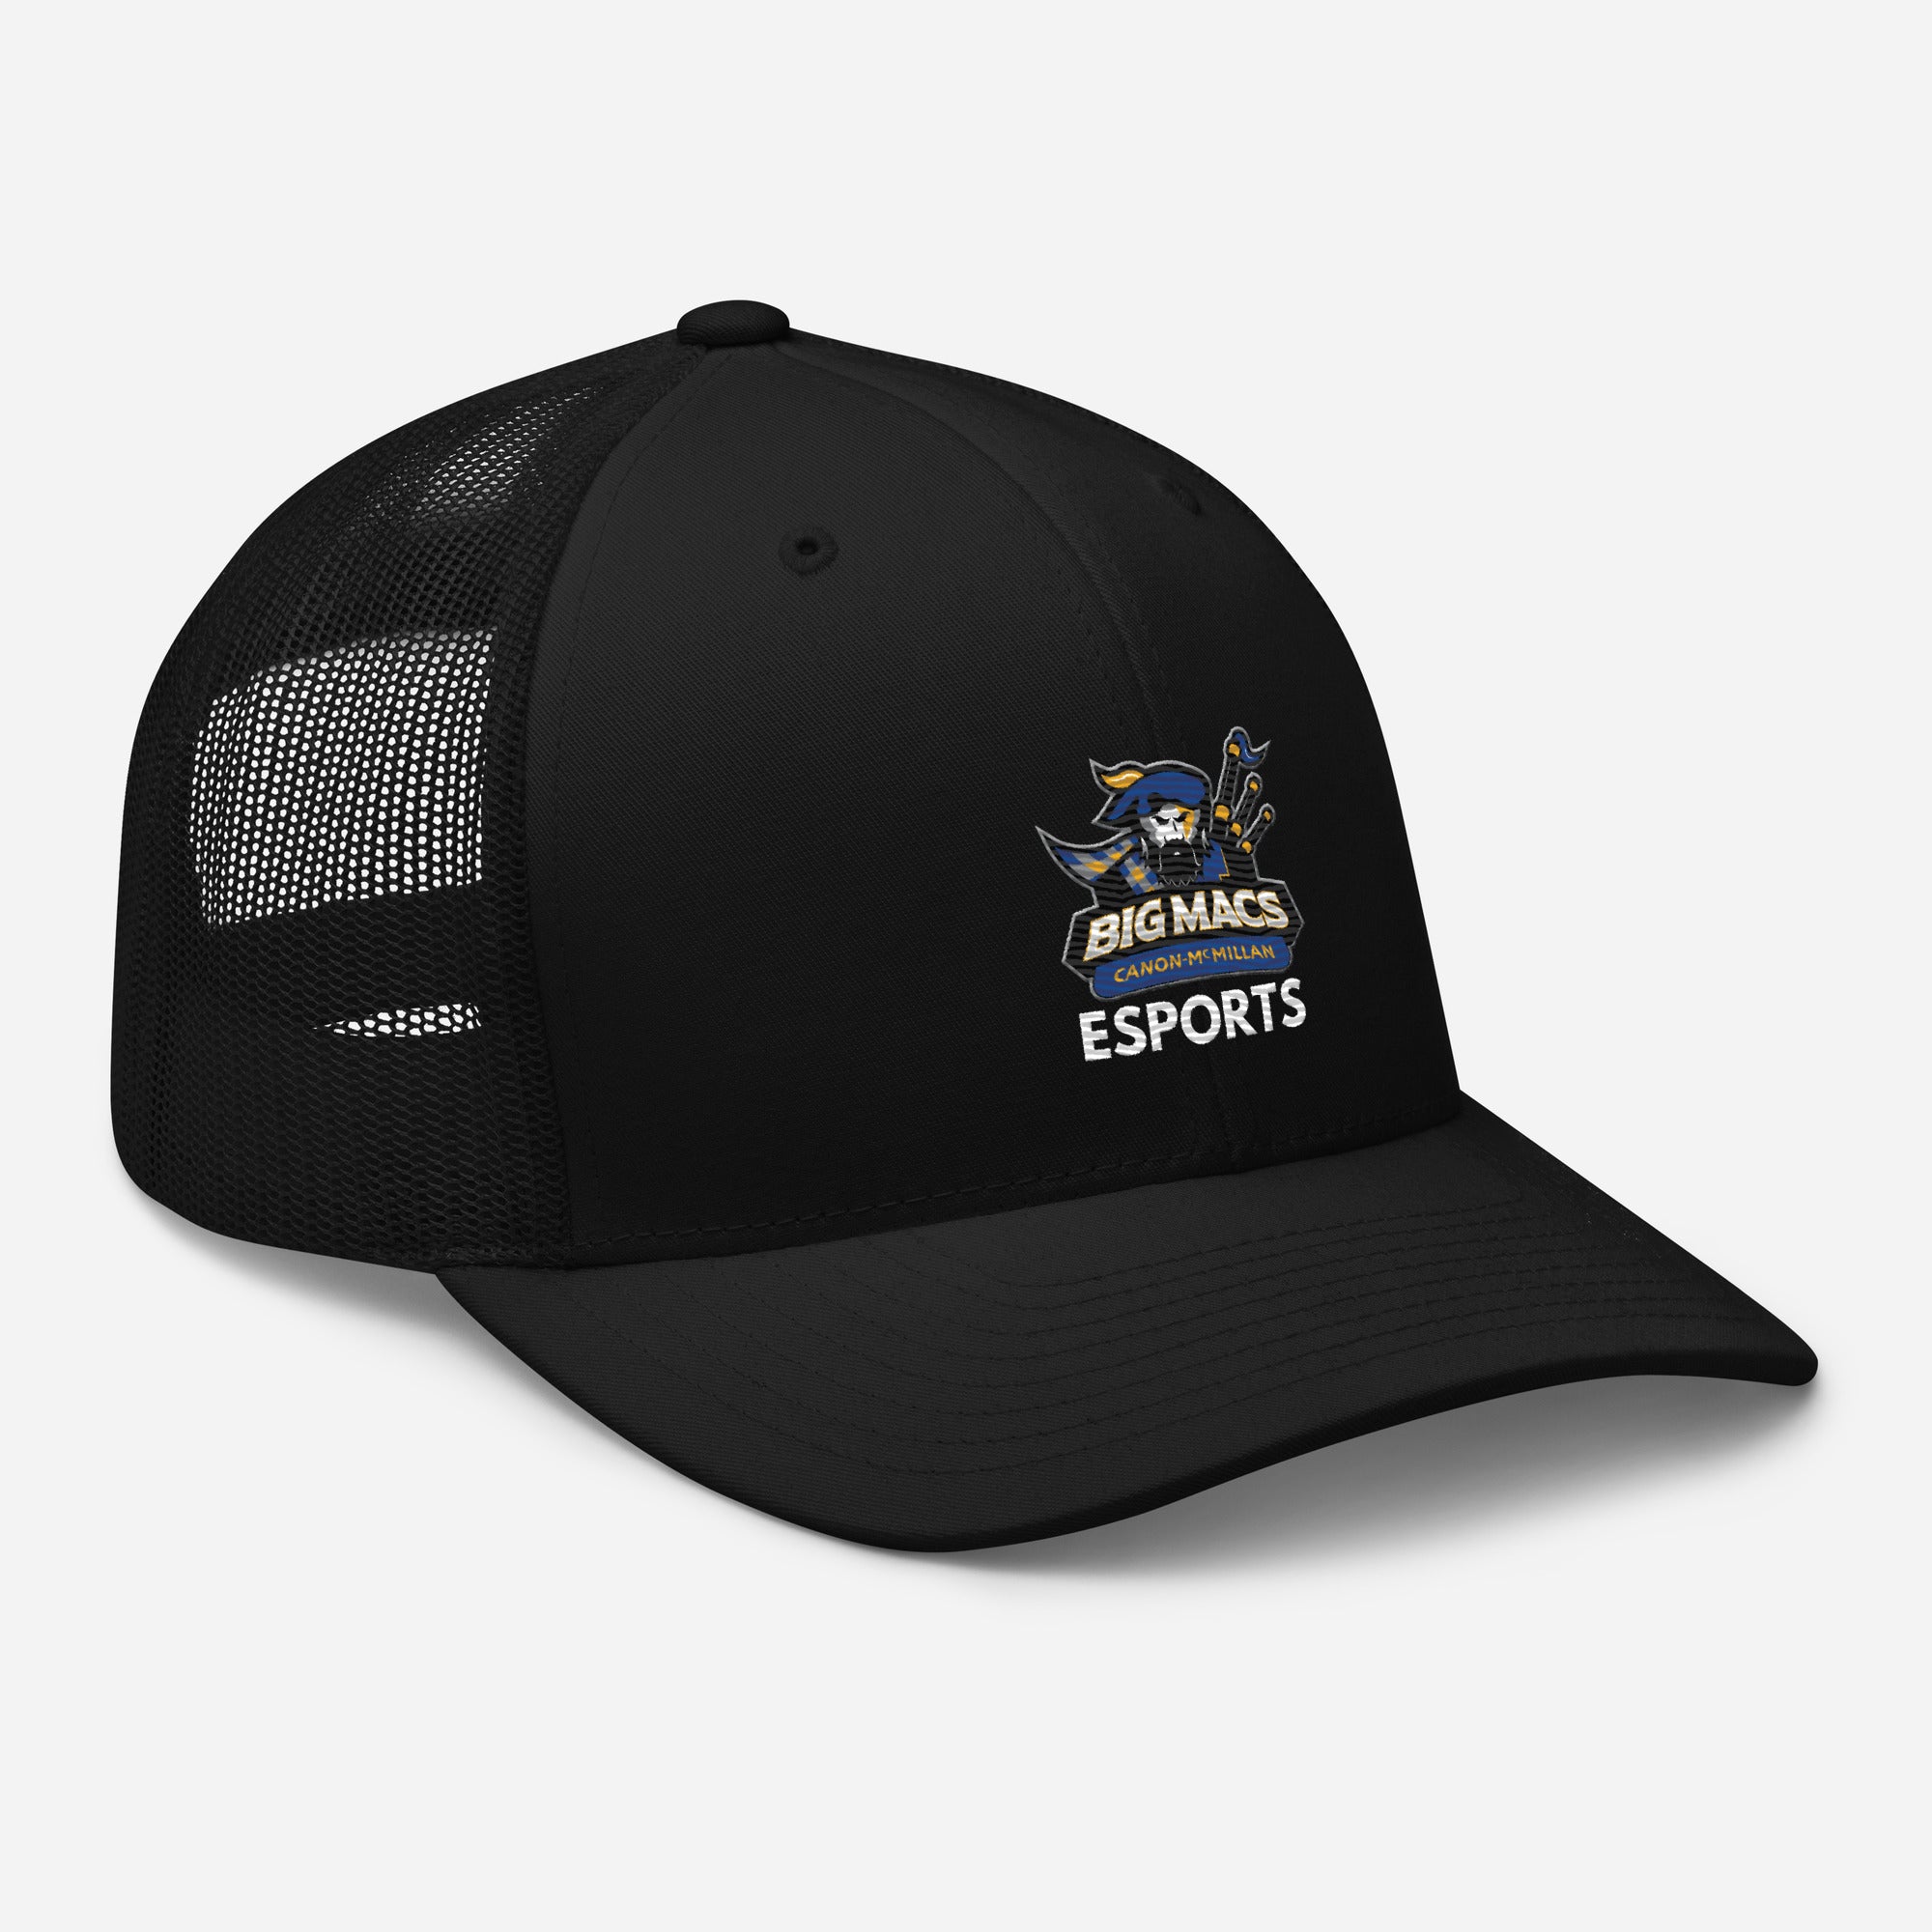 CM Esports Trucker Hat